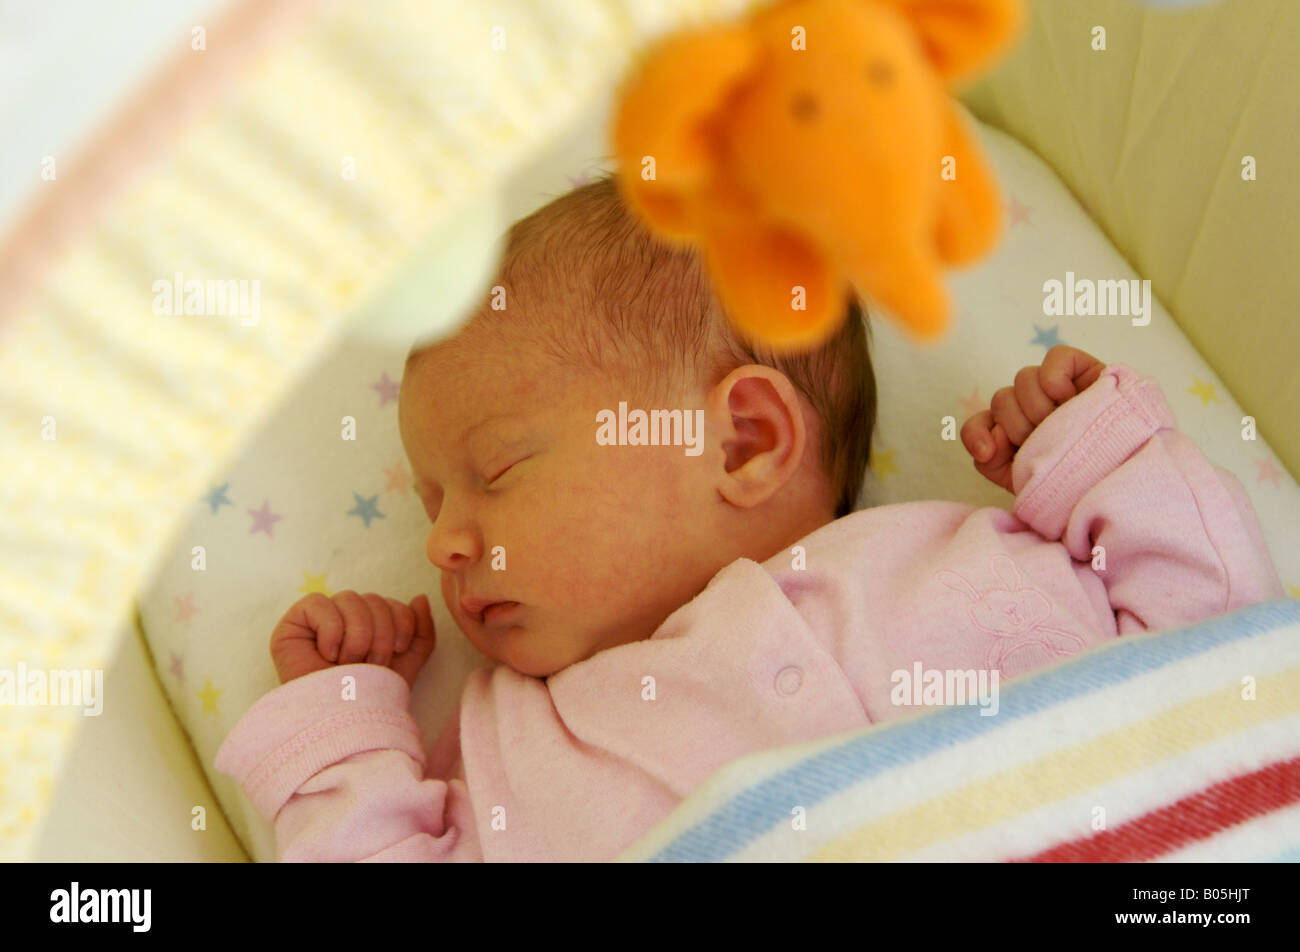 newborn baby in moses basket Stock Photo